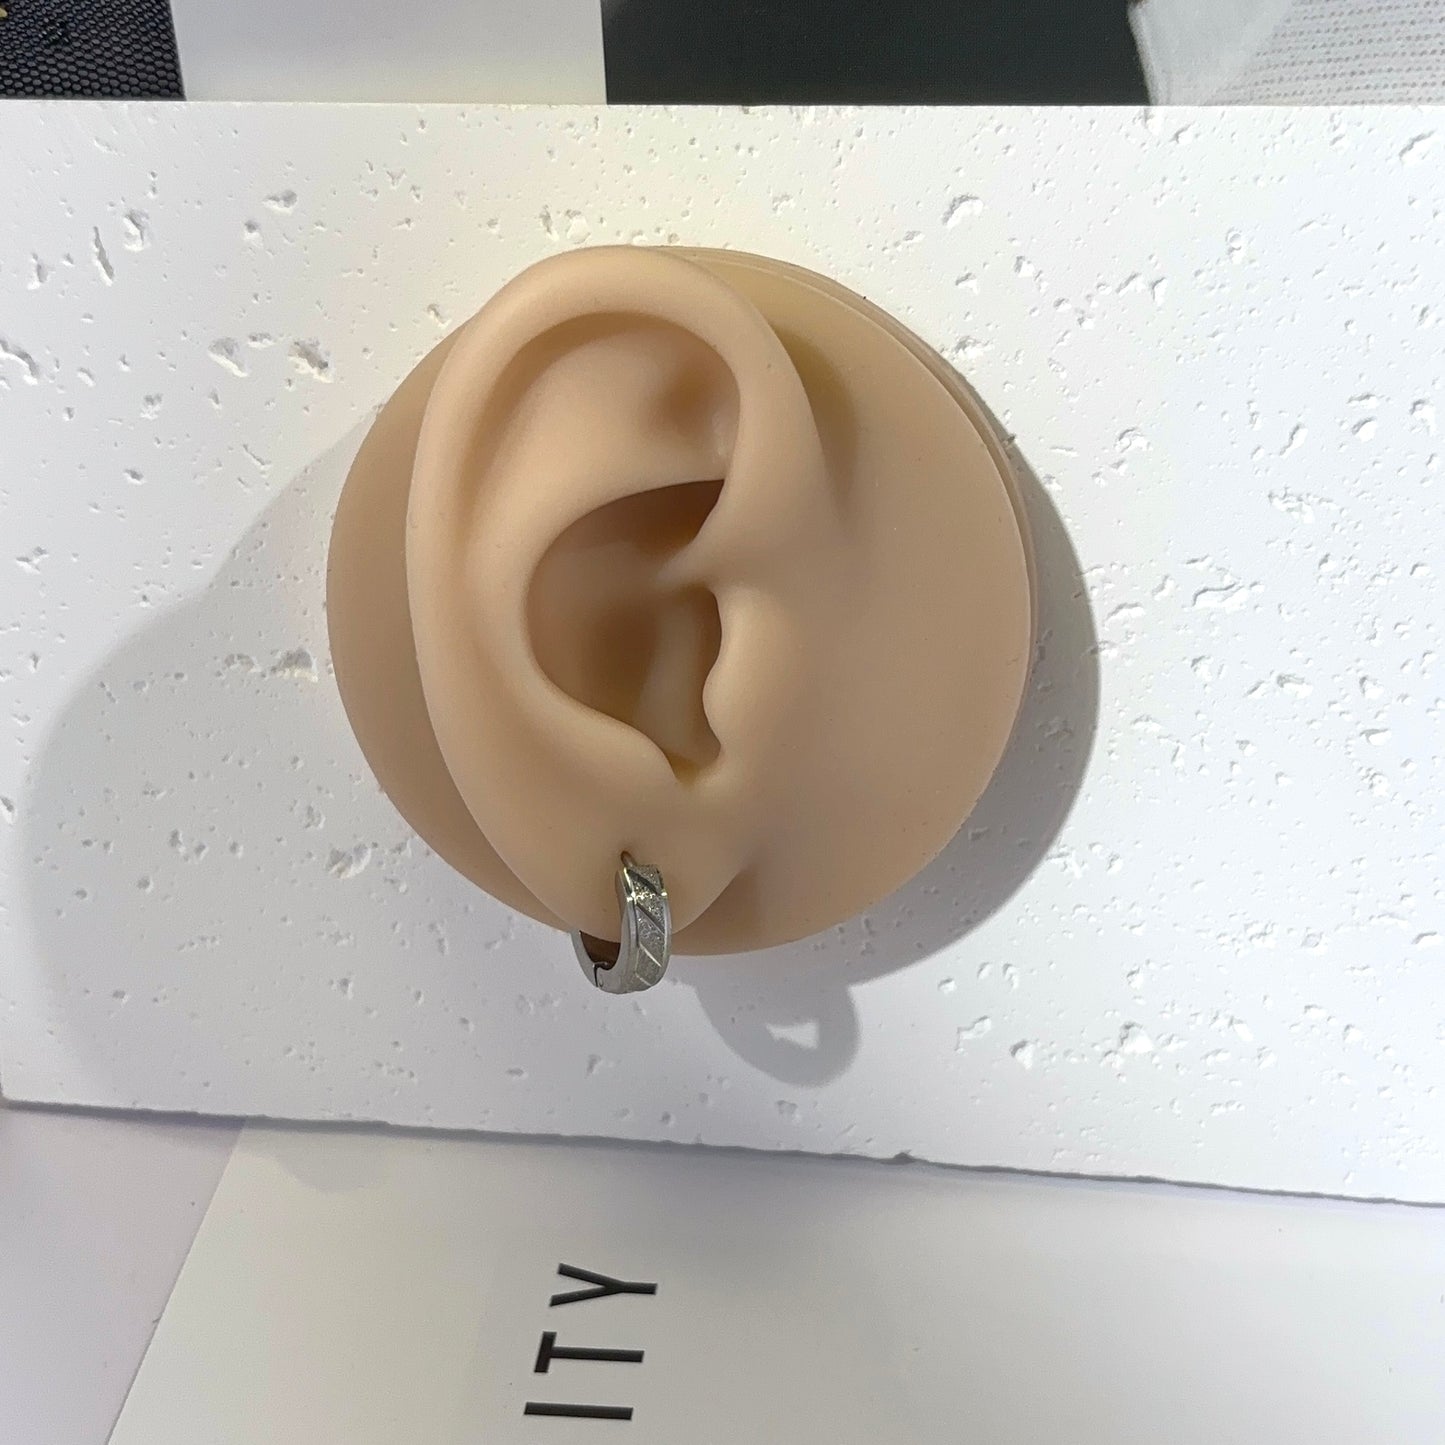 Titanium Steel Small Hoop Earrings for Men Women,Unisex Punk Hip Hop Earrings